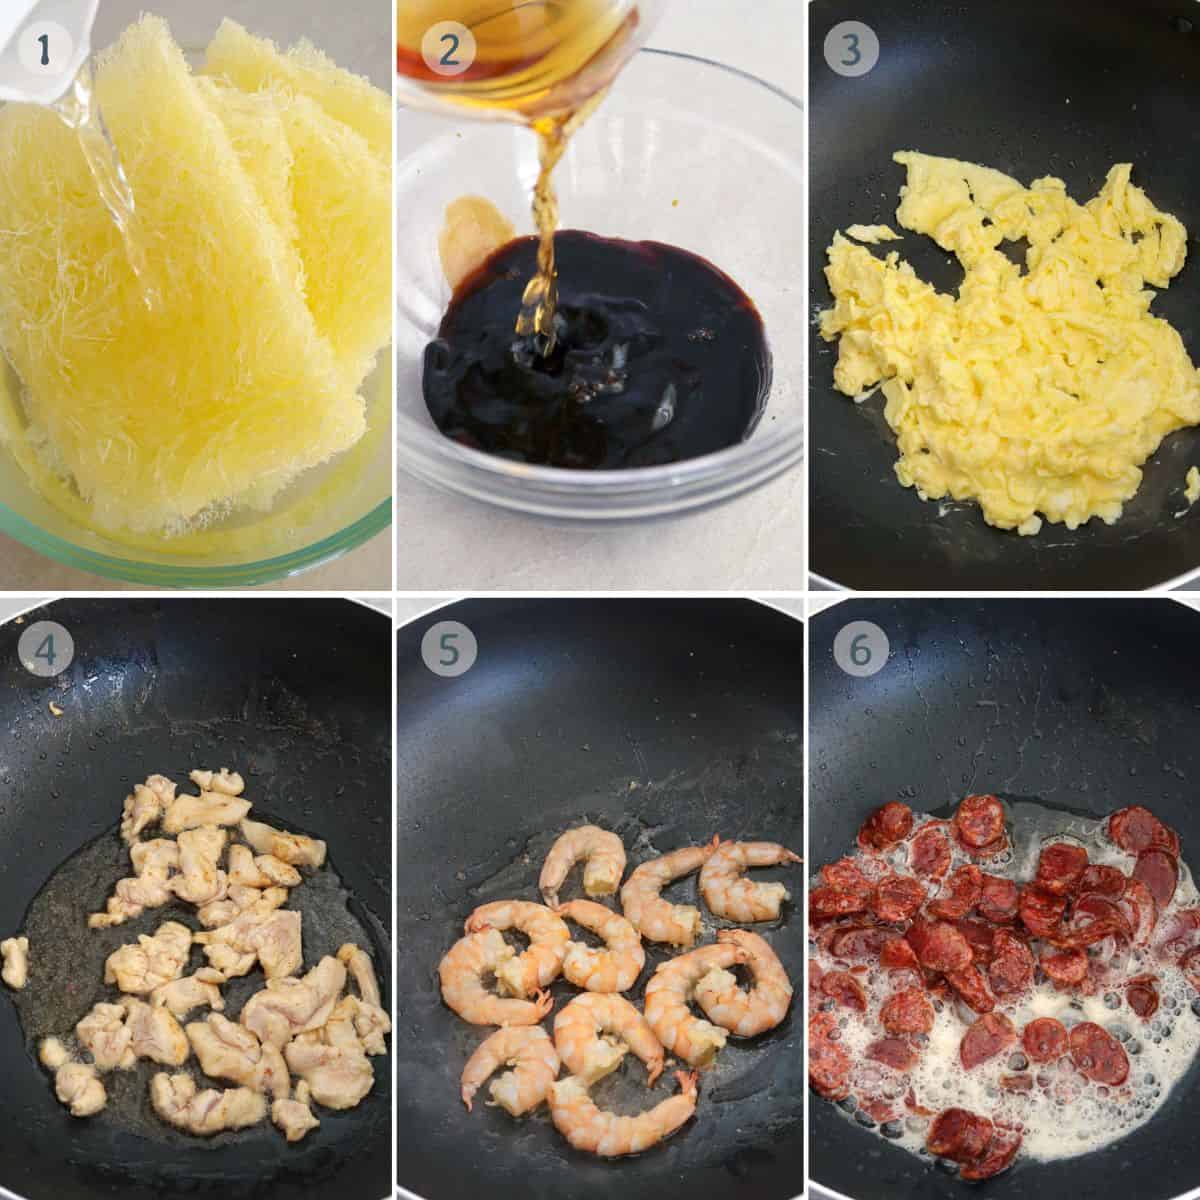 preparing ingredients for Singapore noodles.